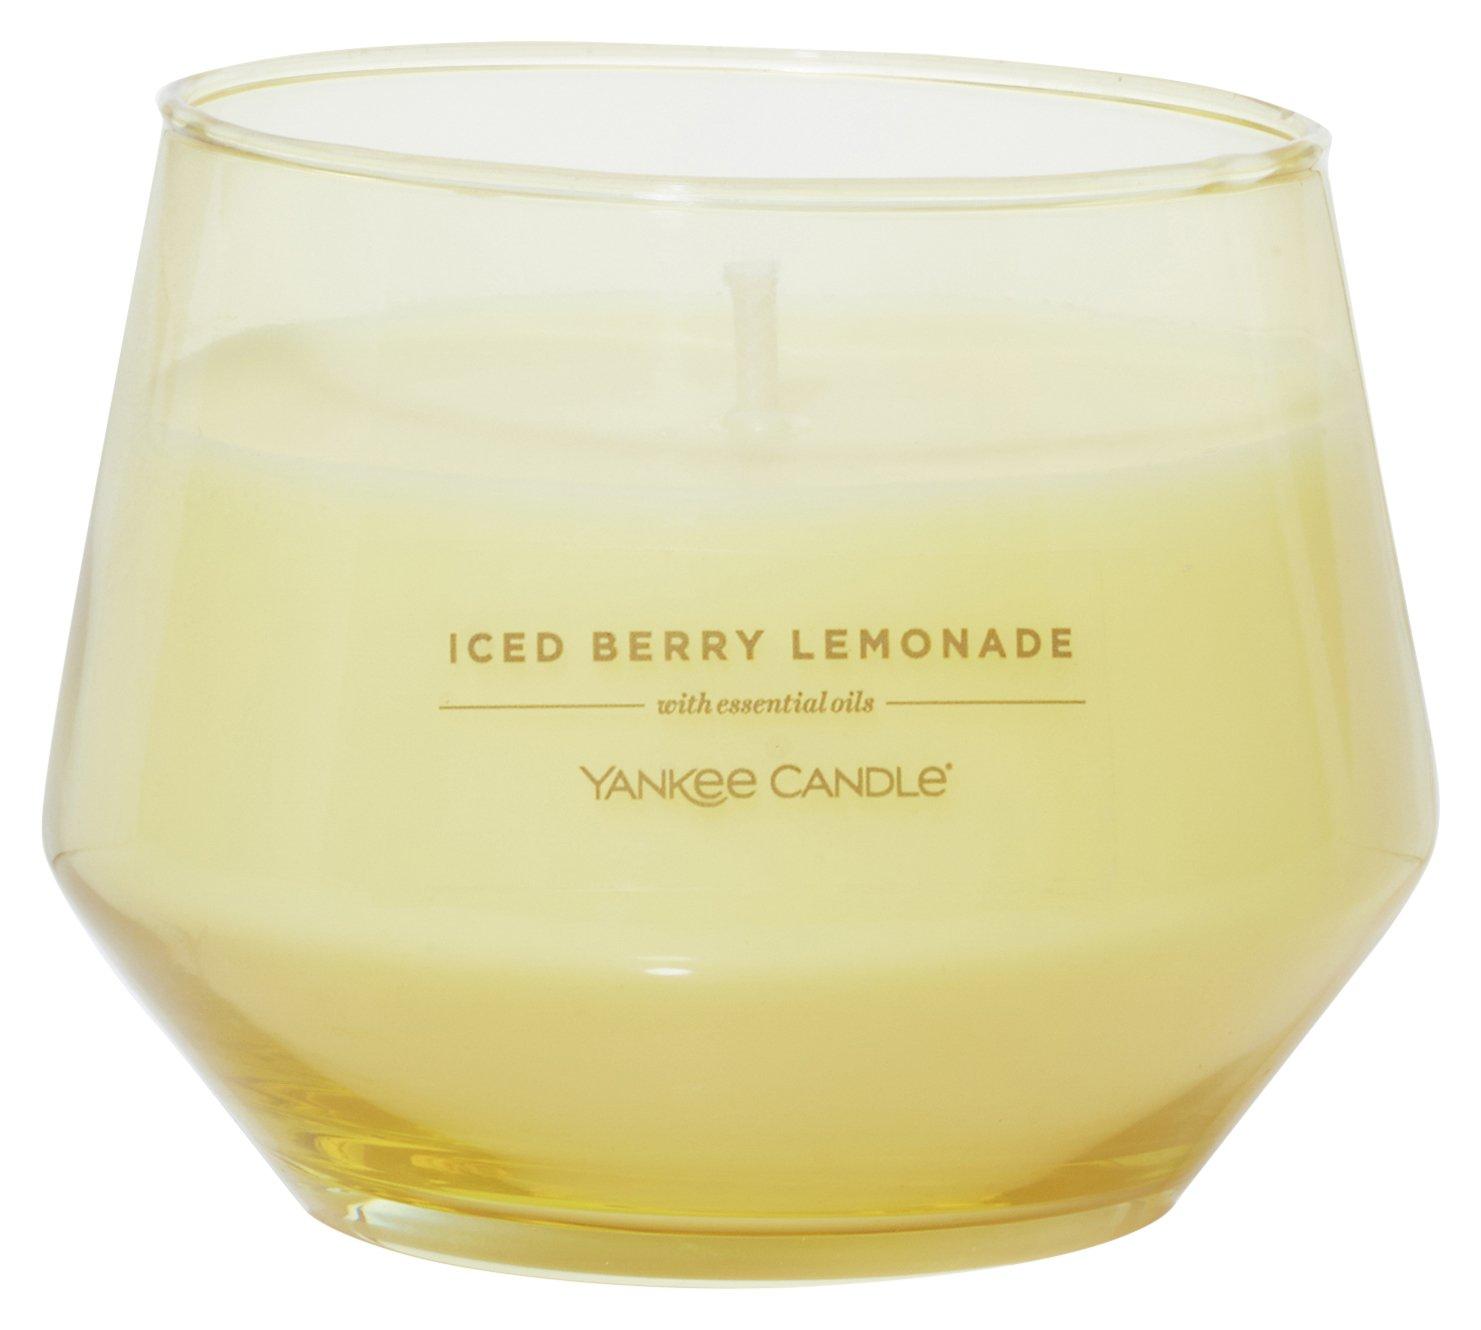 Yankee Candle 10oz Iced Berry Lemonade Candle